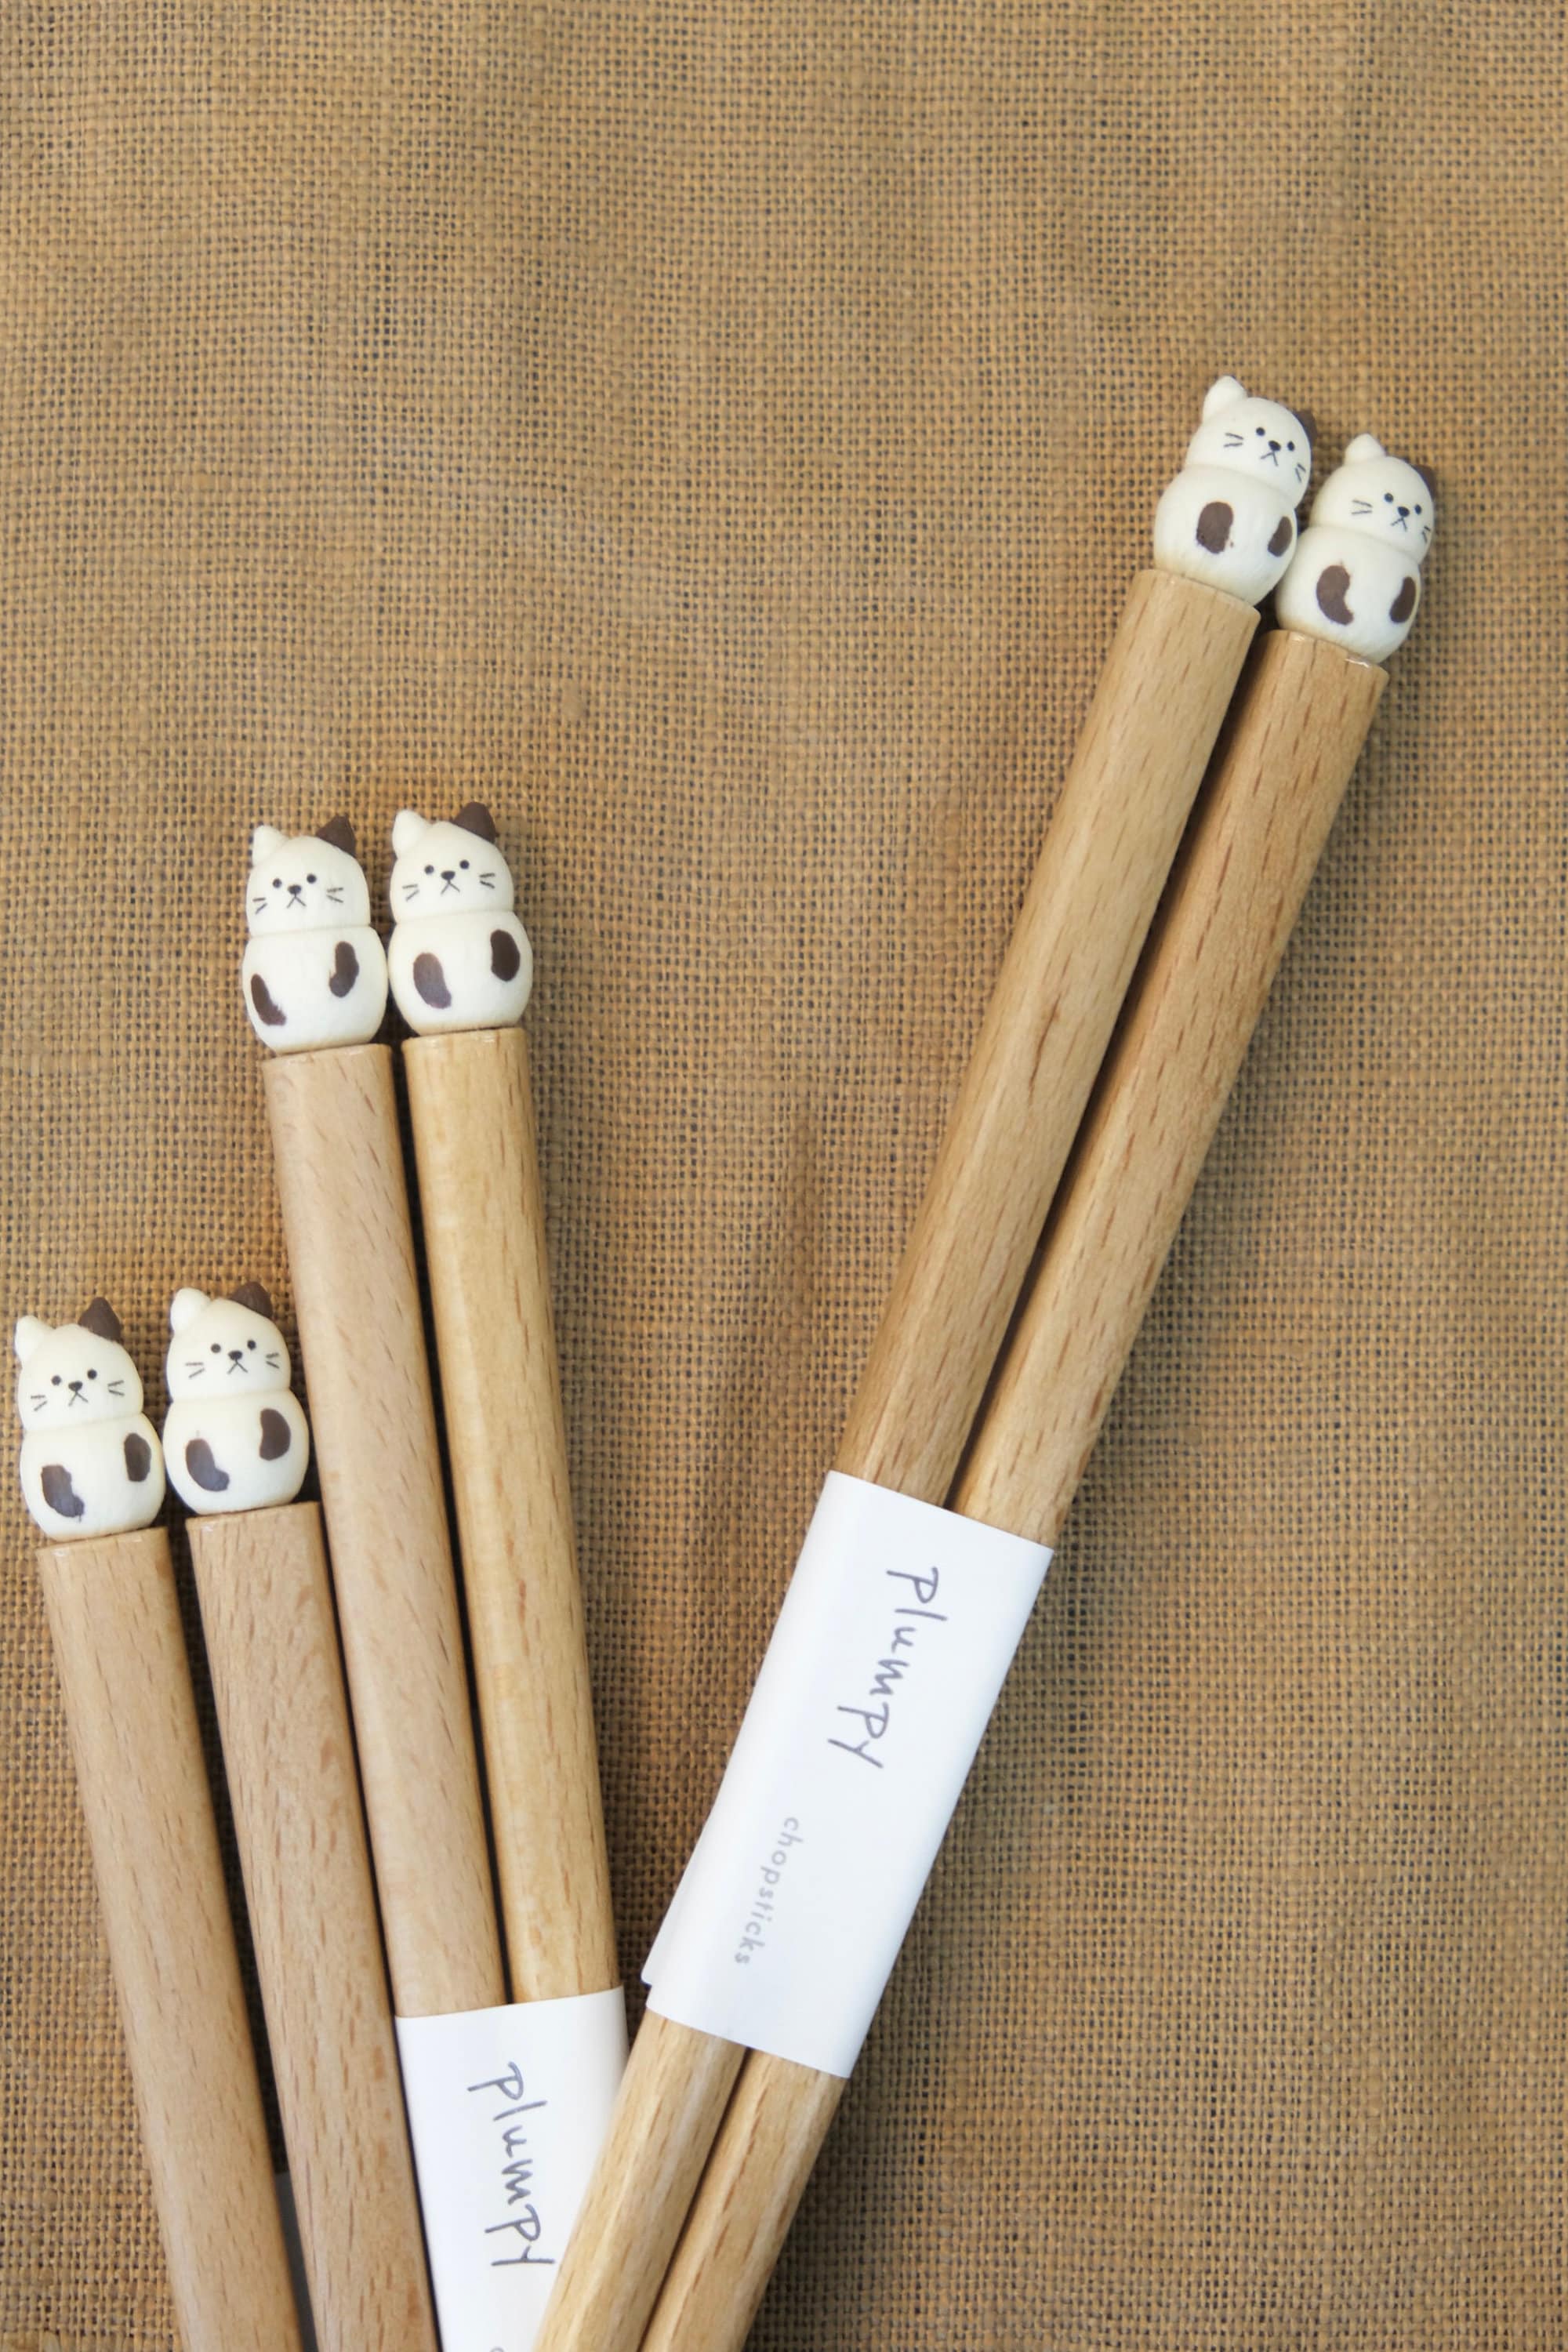 Collapsible Chopsticks | Chopsticks For Kids - Collapsible Chopsticks  Portable Travel Chopsticks Detachable Red Sandalwood Wood Chopsticks  Outdoor Cam